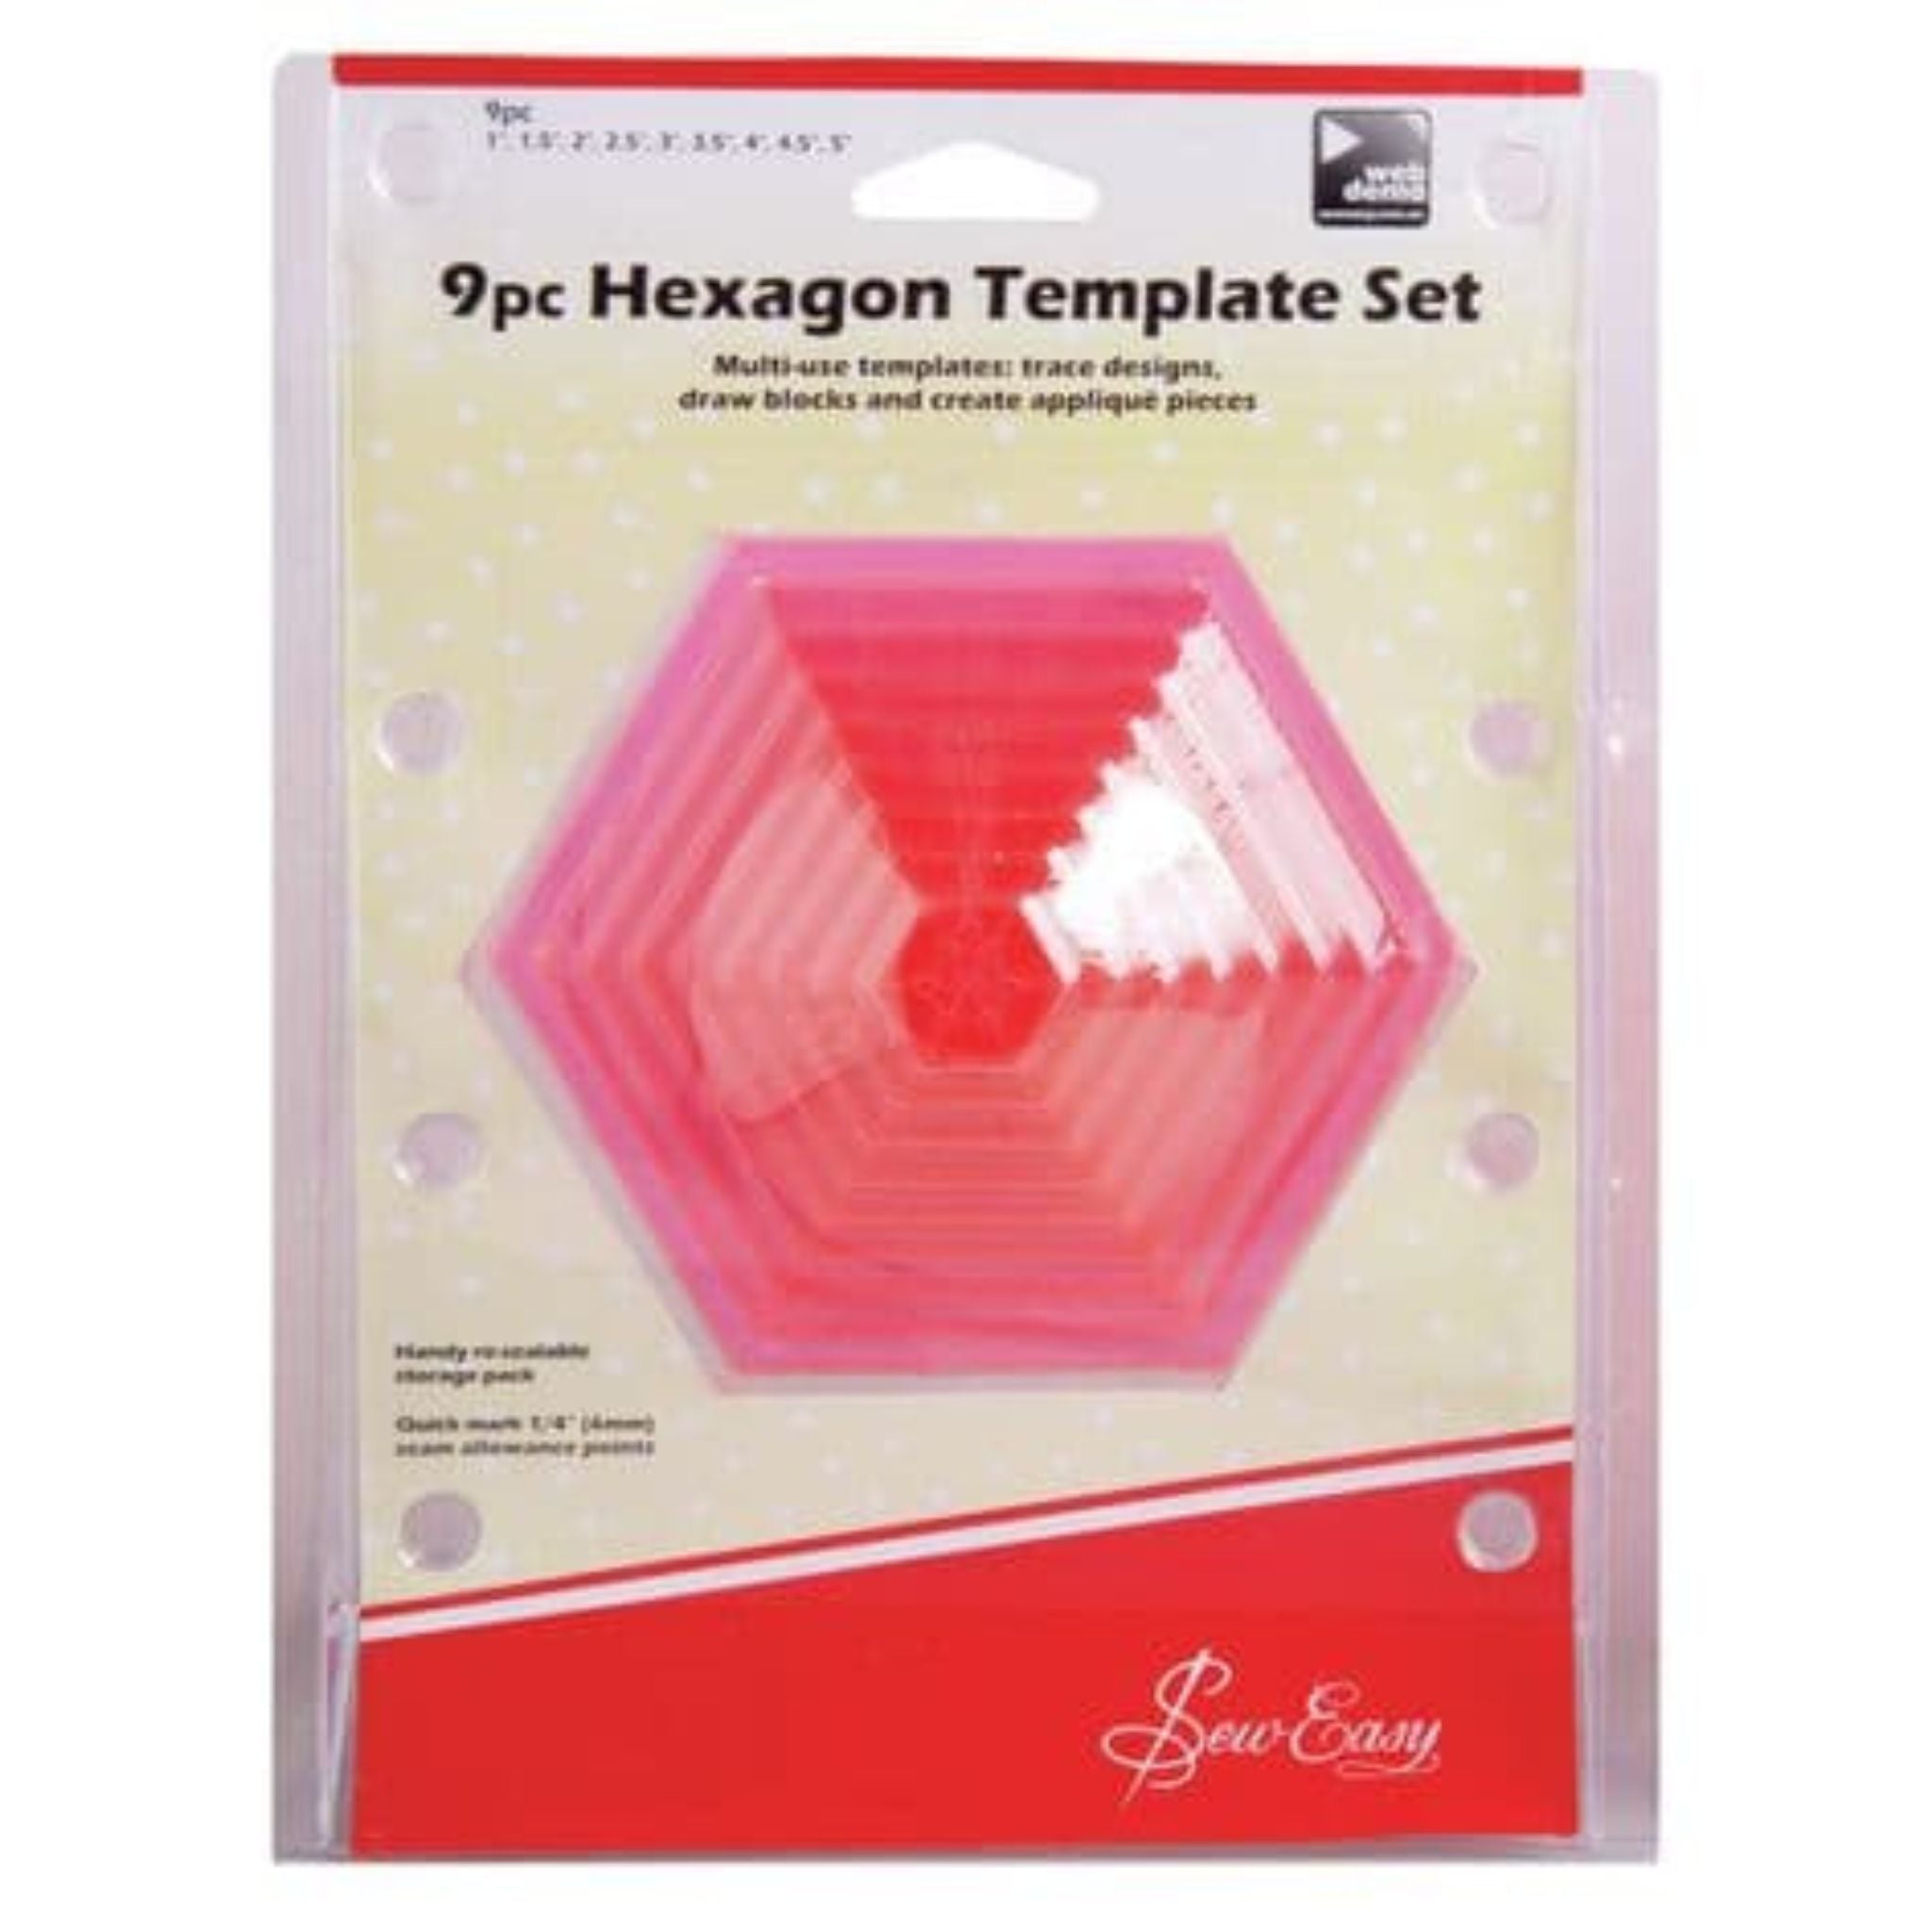 Sew Easy 9 piece hexagon template set